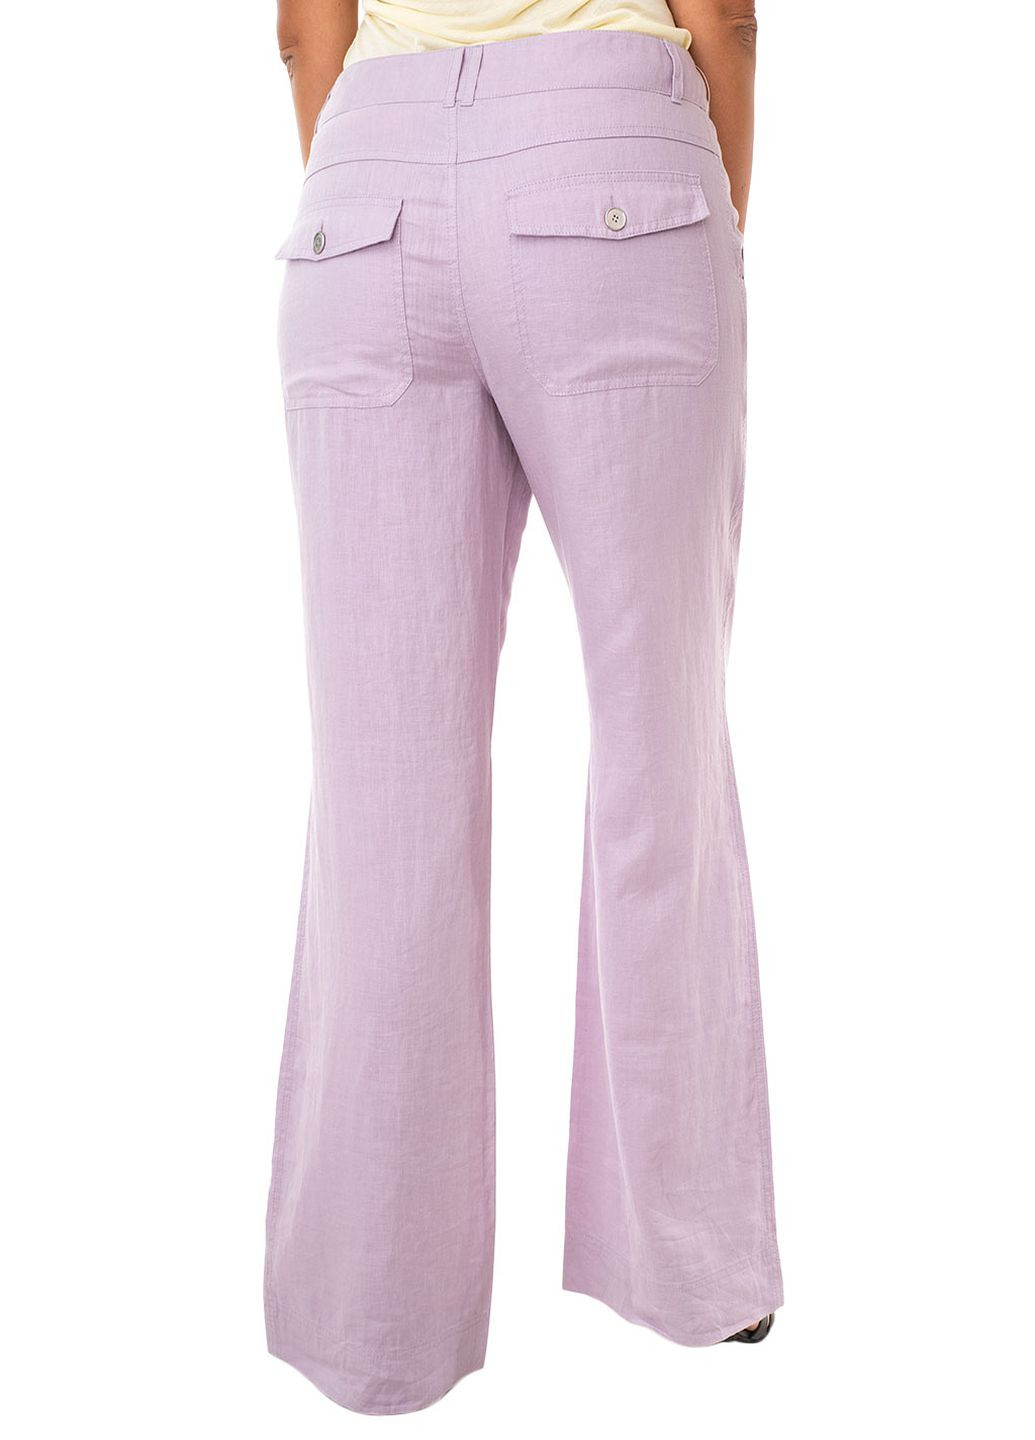 Розовые летние брюки Apriori